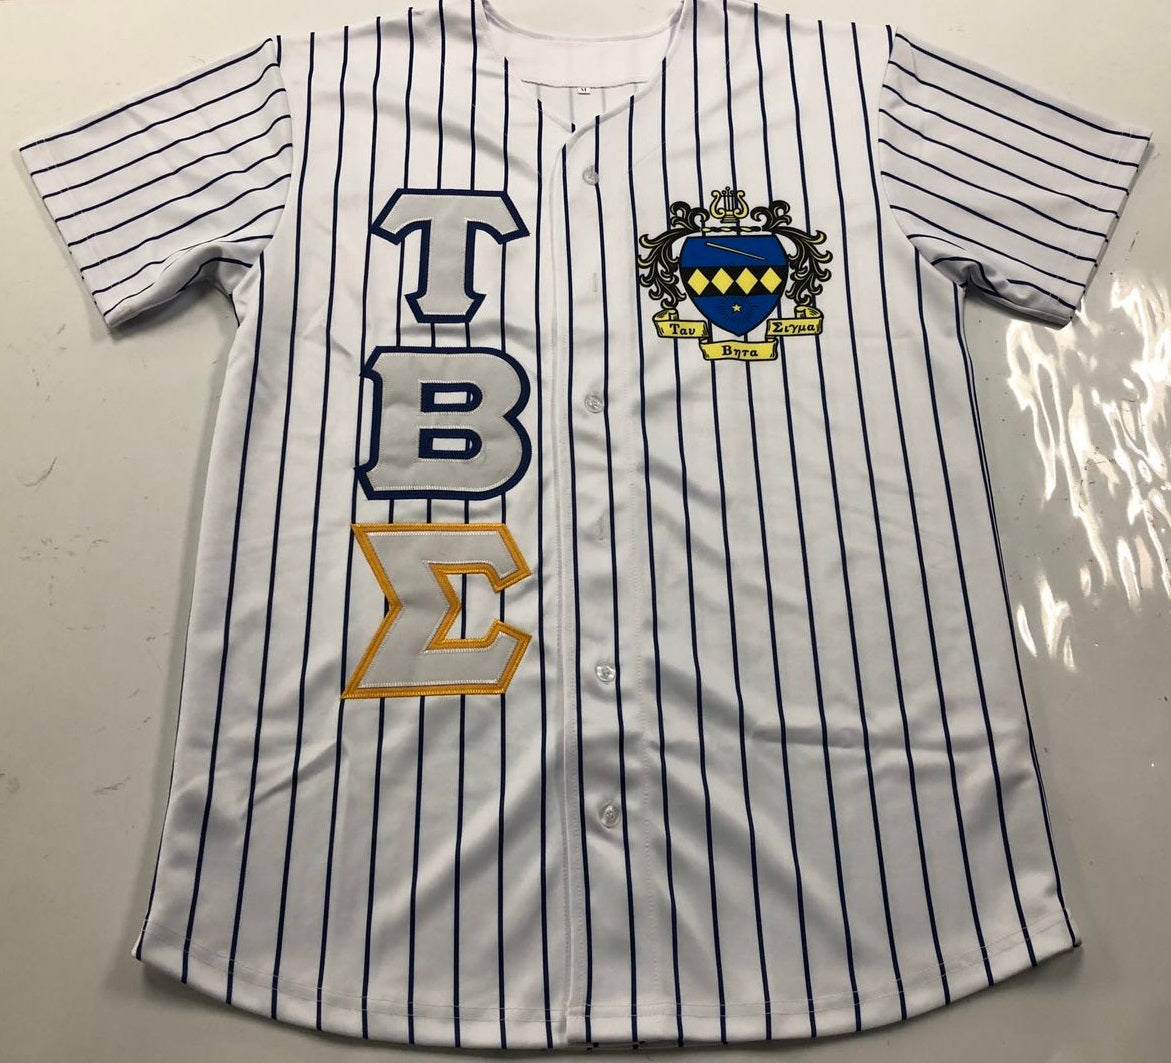 Tau Beta Sigma - Black Baseball Jersey With Crest